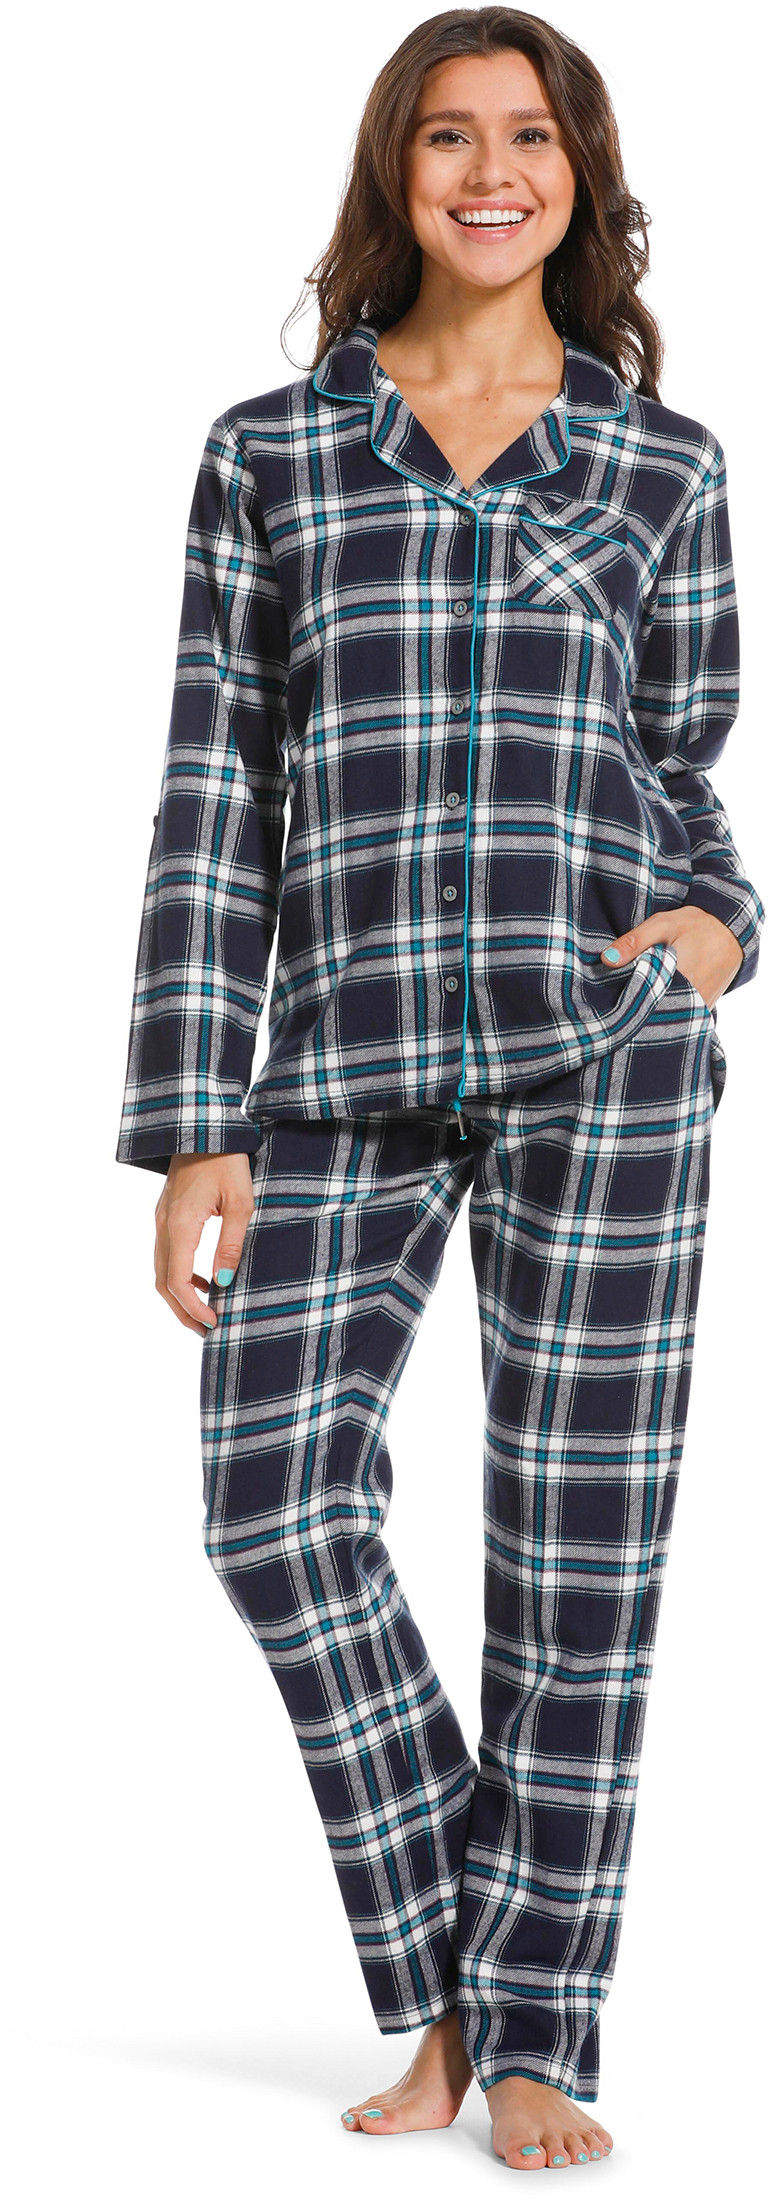 Rebelle dames pyjama flanel 21222-408-6-38